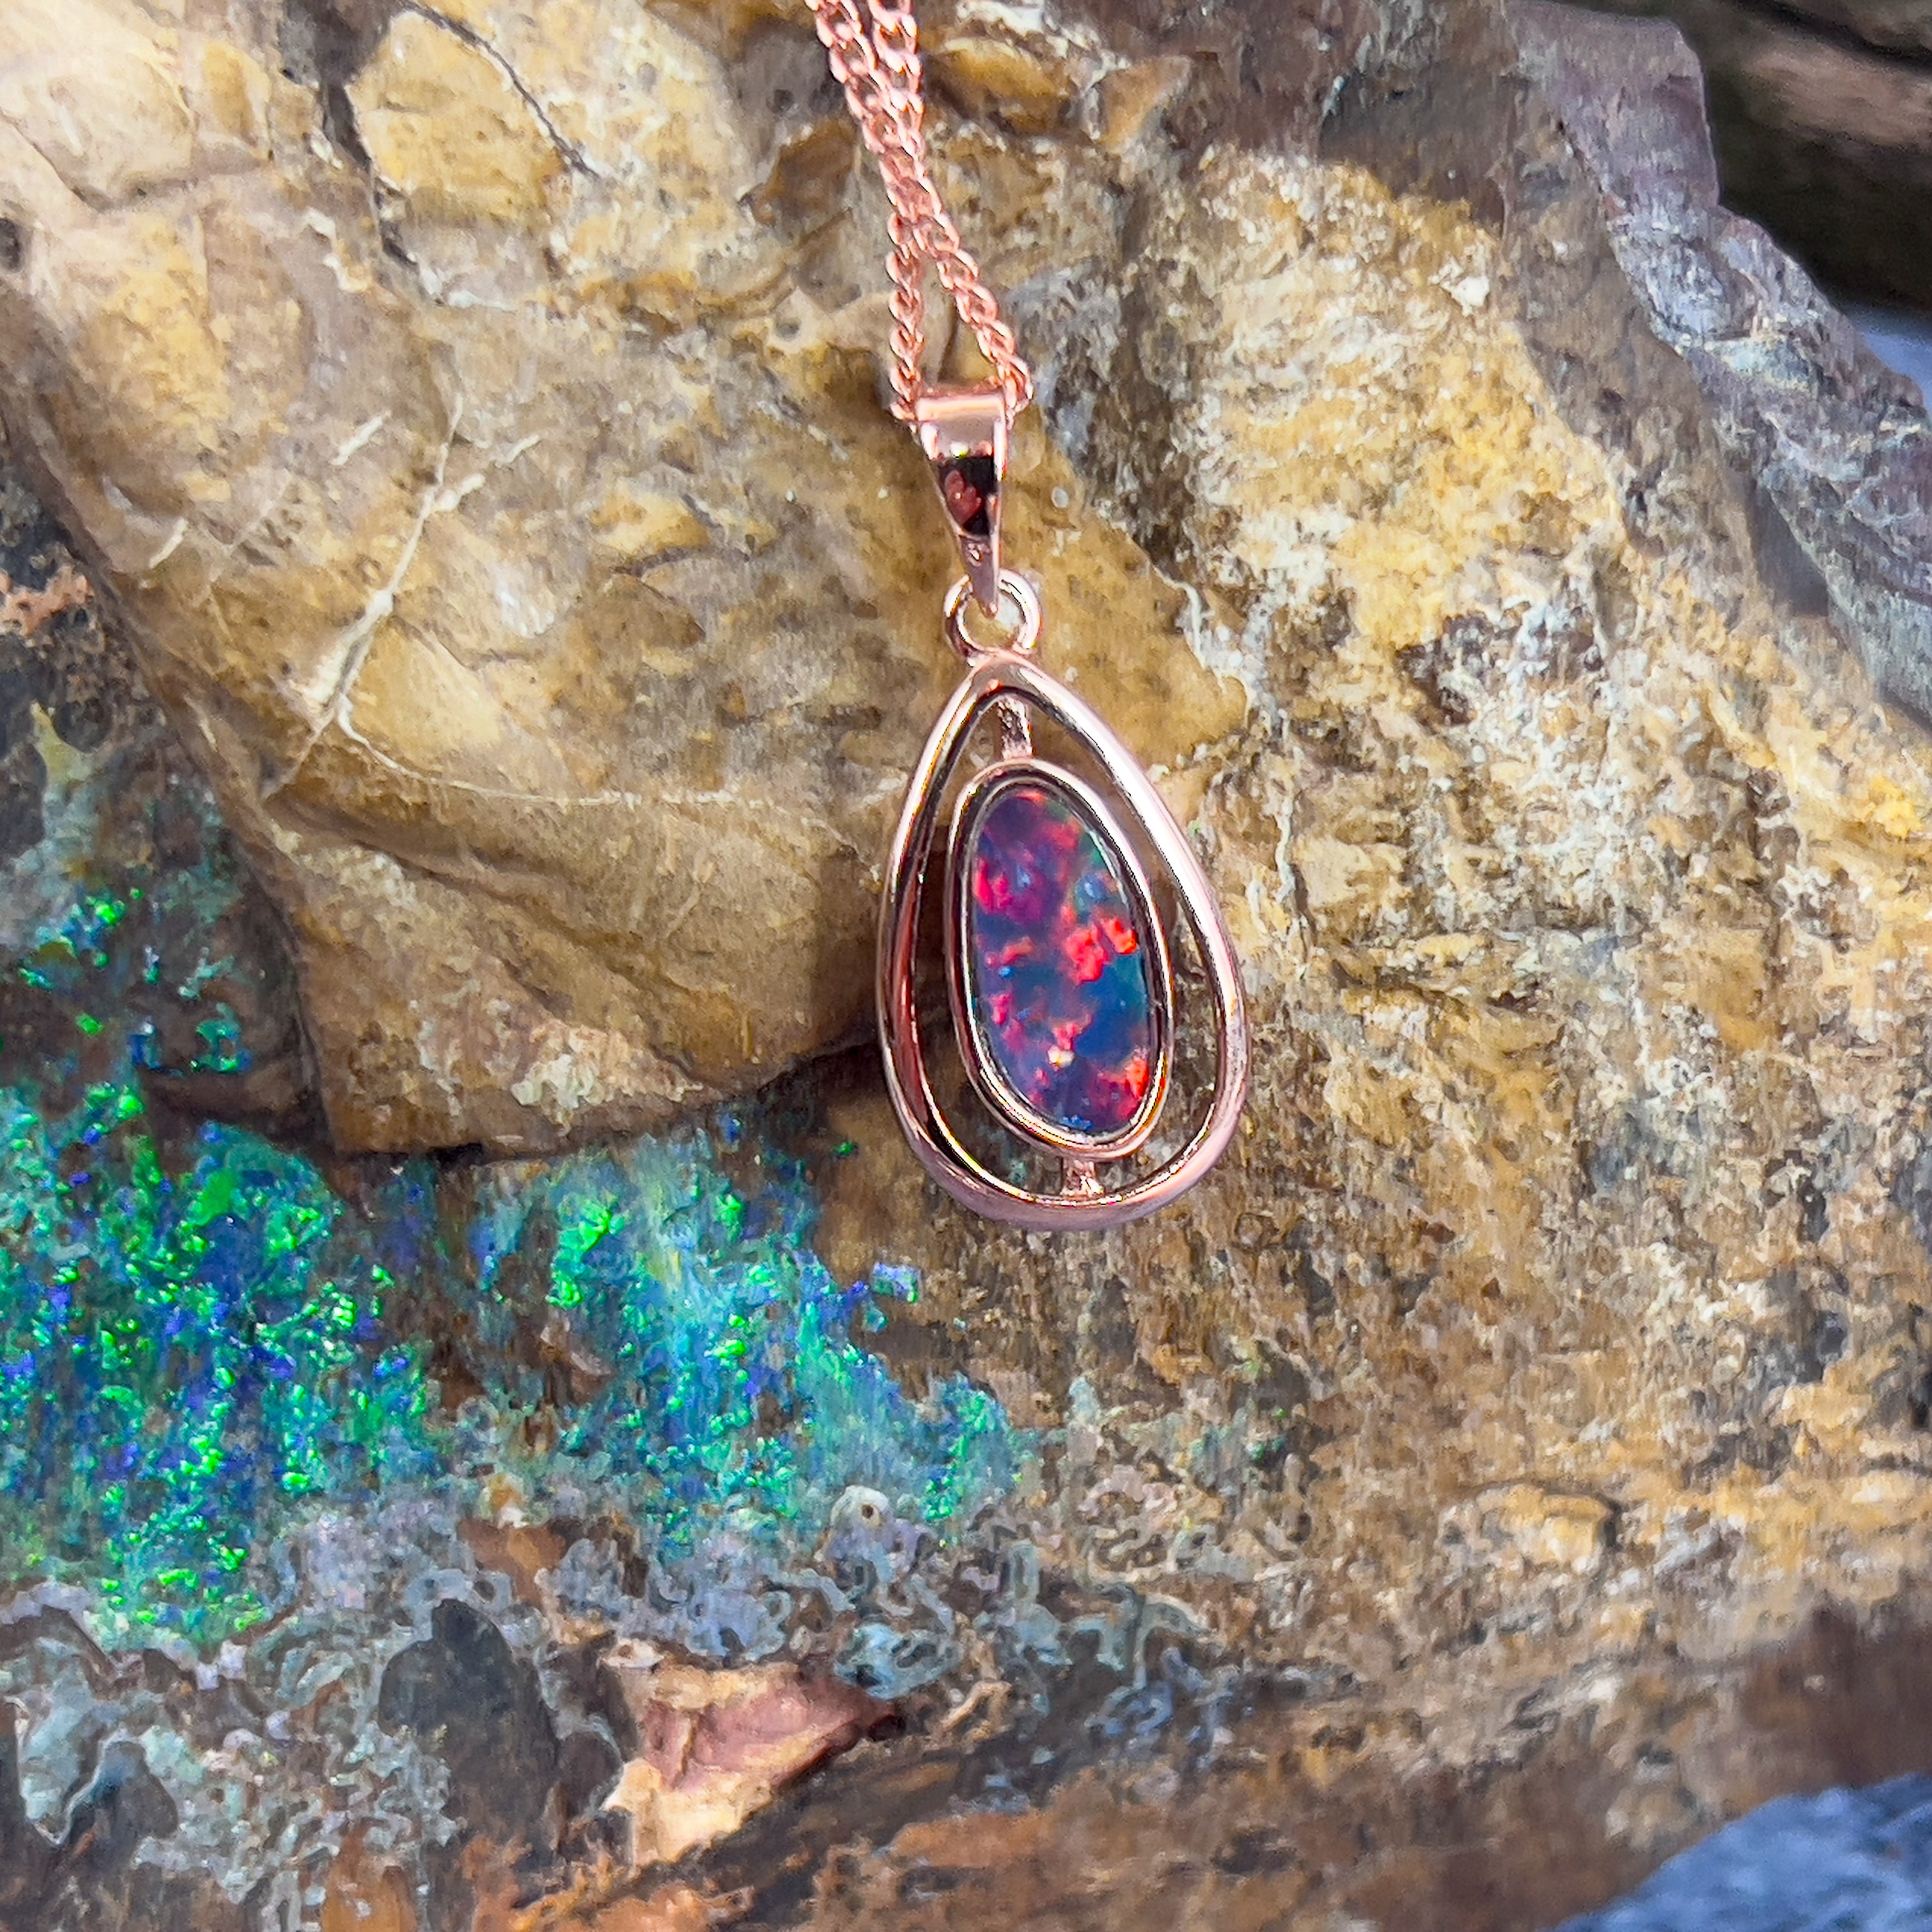 Rose Gold Plated silver Opal doublet pendants - Masterpiece Jewellery Opal & Gems Sydney Australia | Online Shop